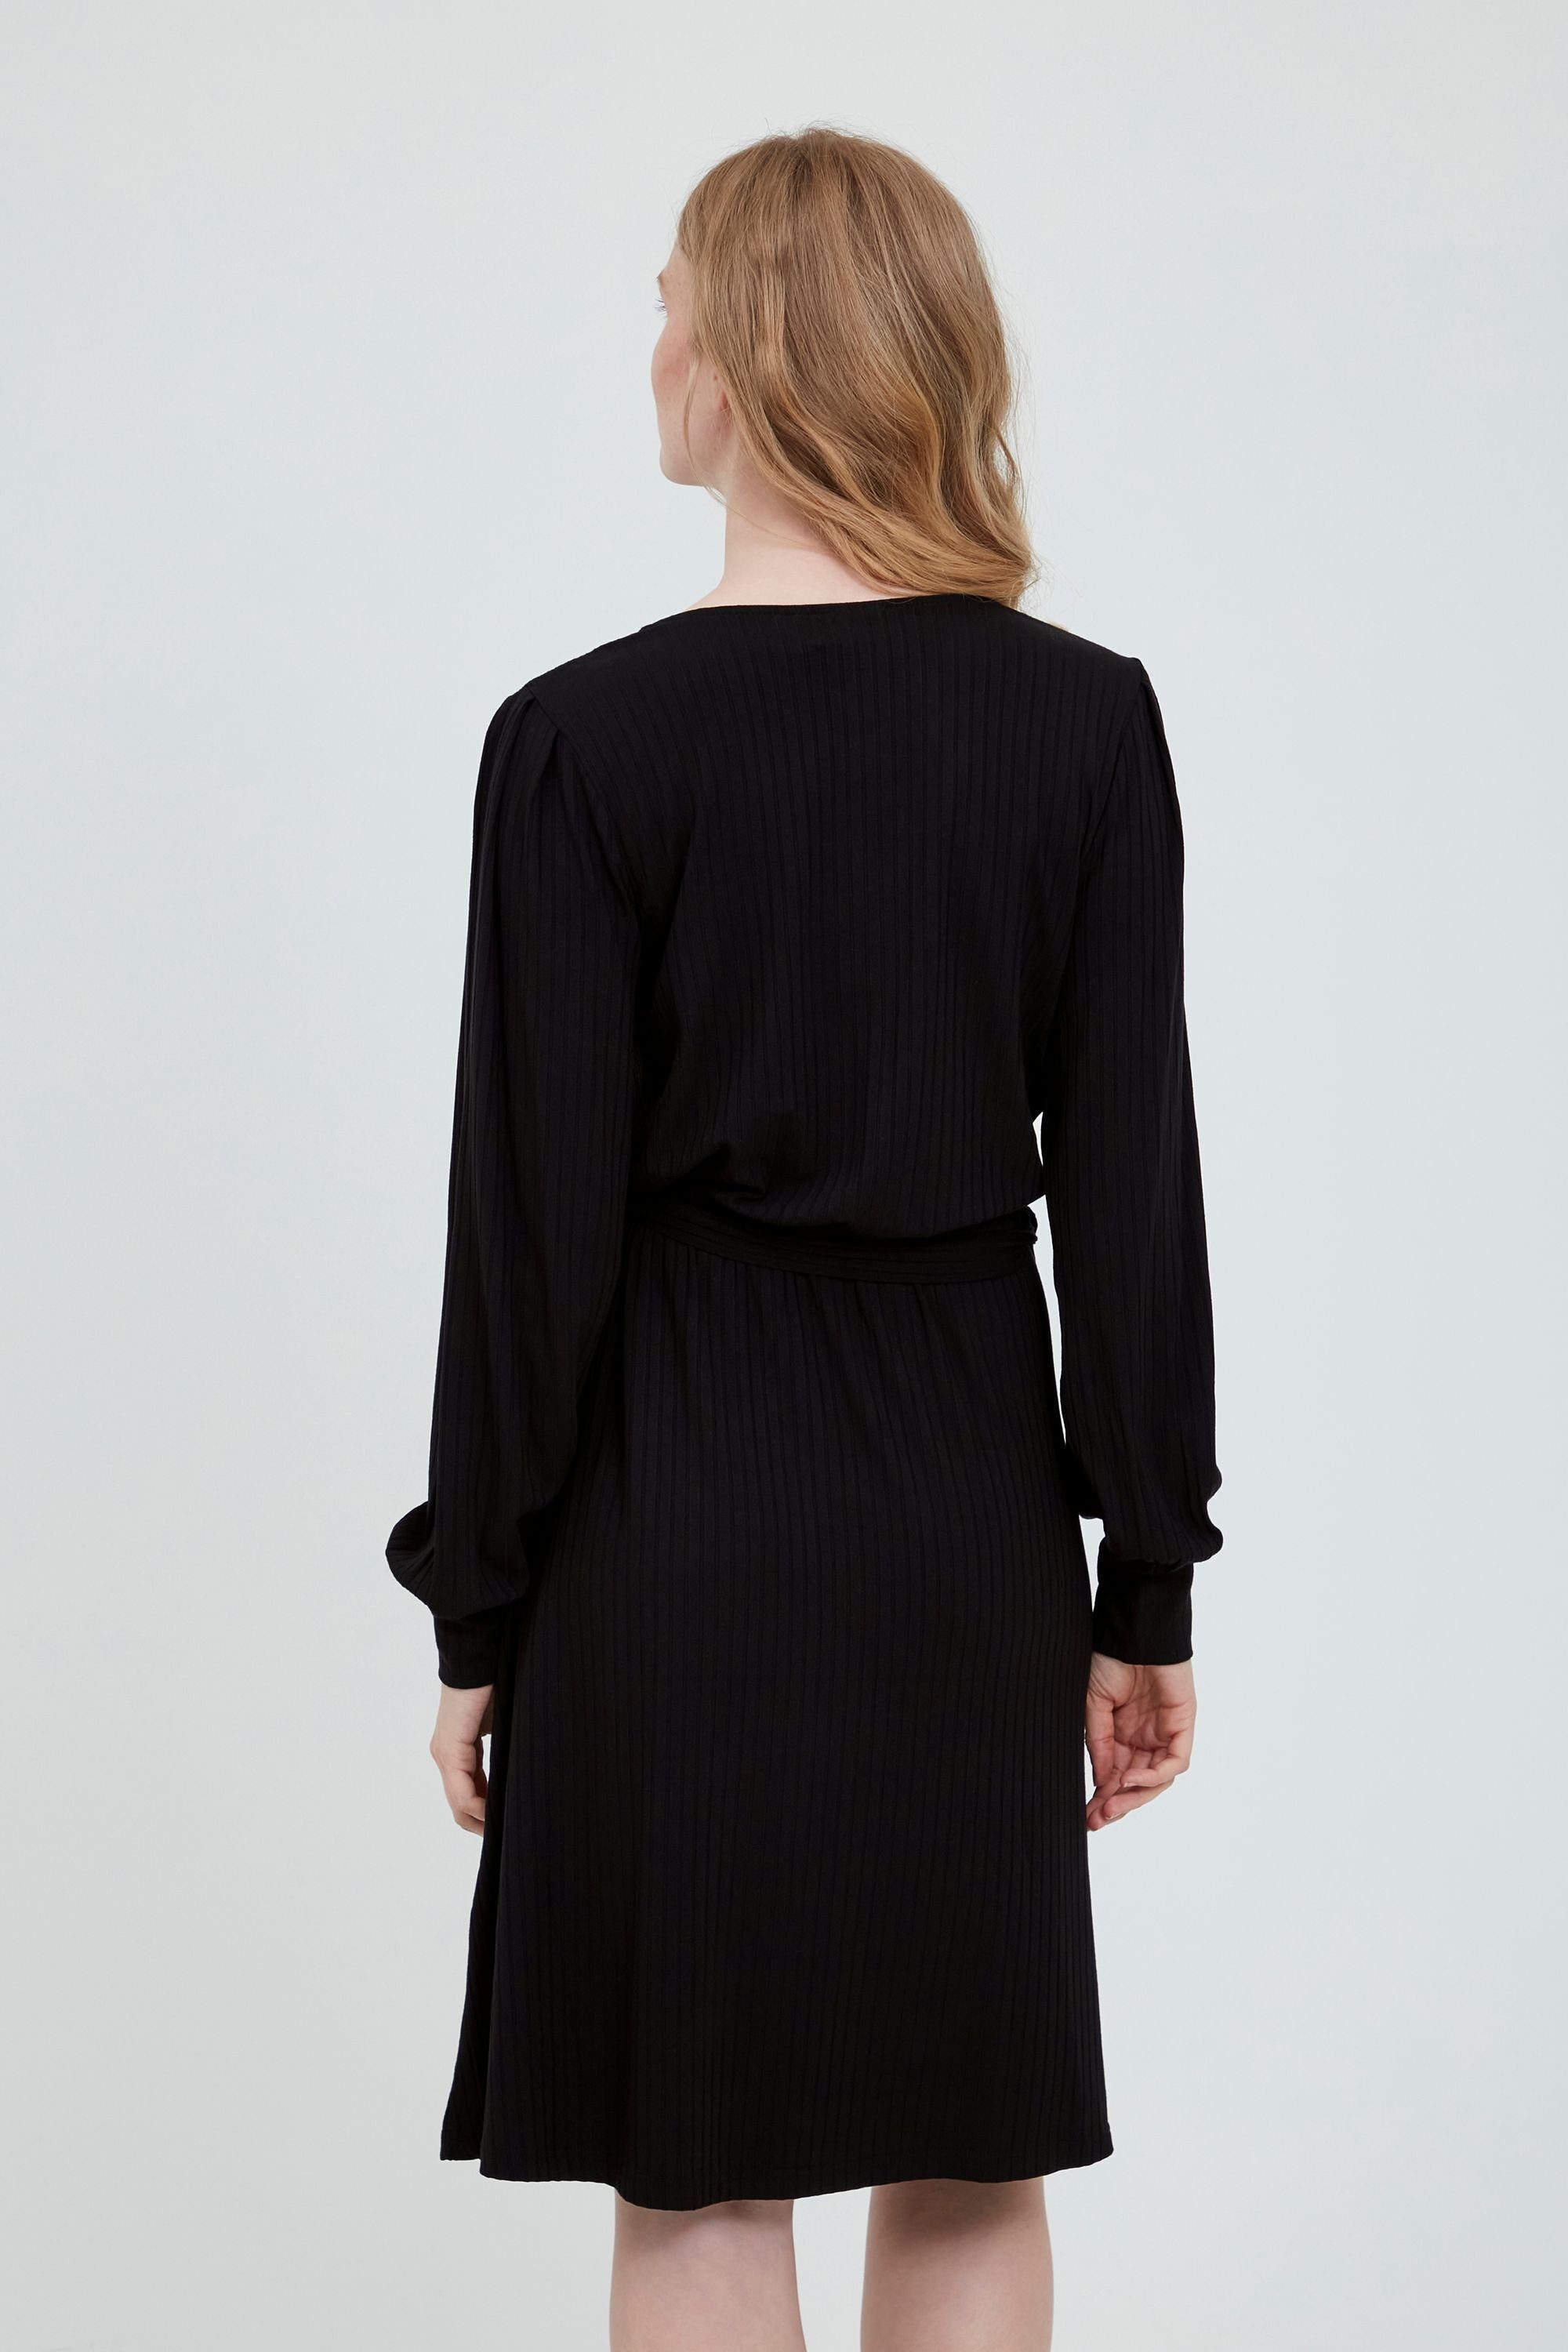 Wickelkleid FRBERIB - 2 Black Dress 20609547 fransa Fransa